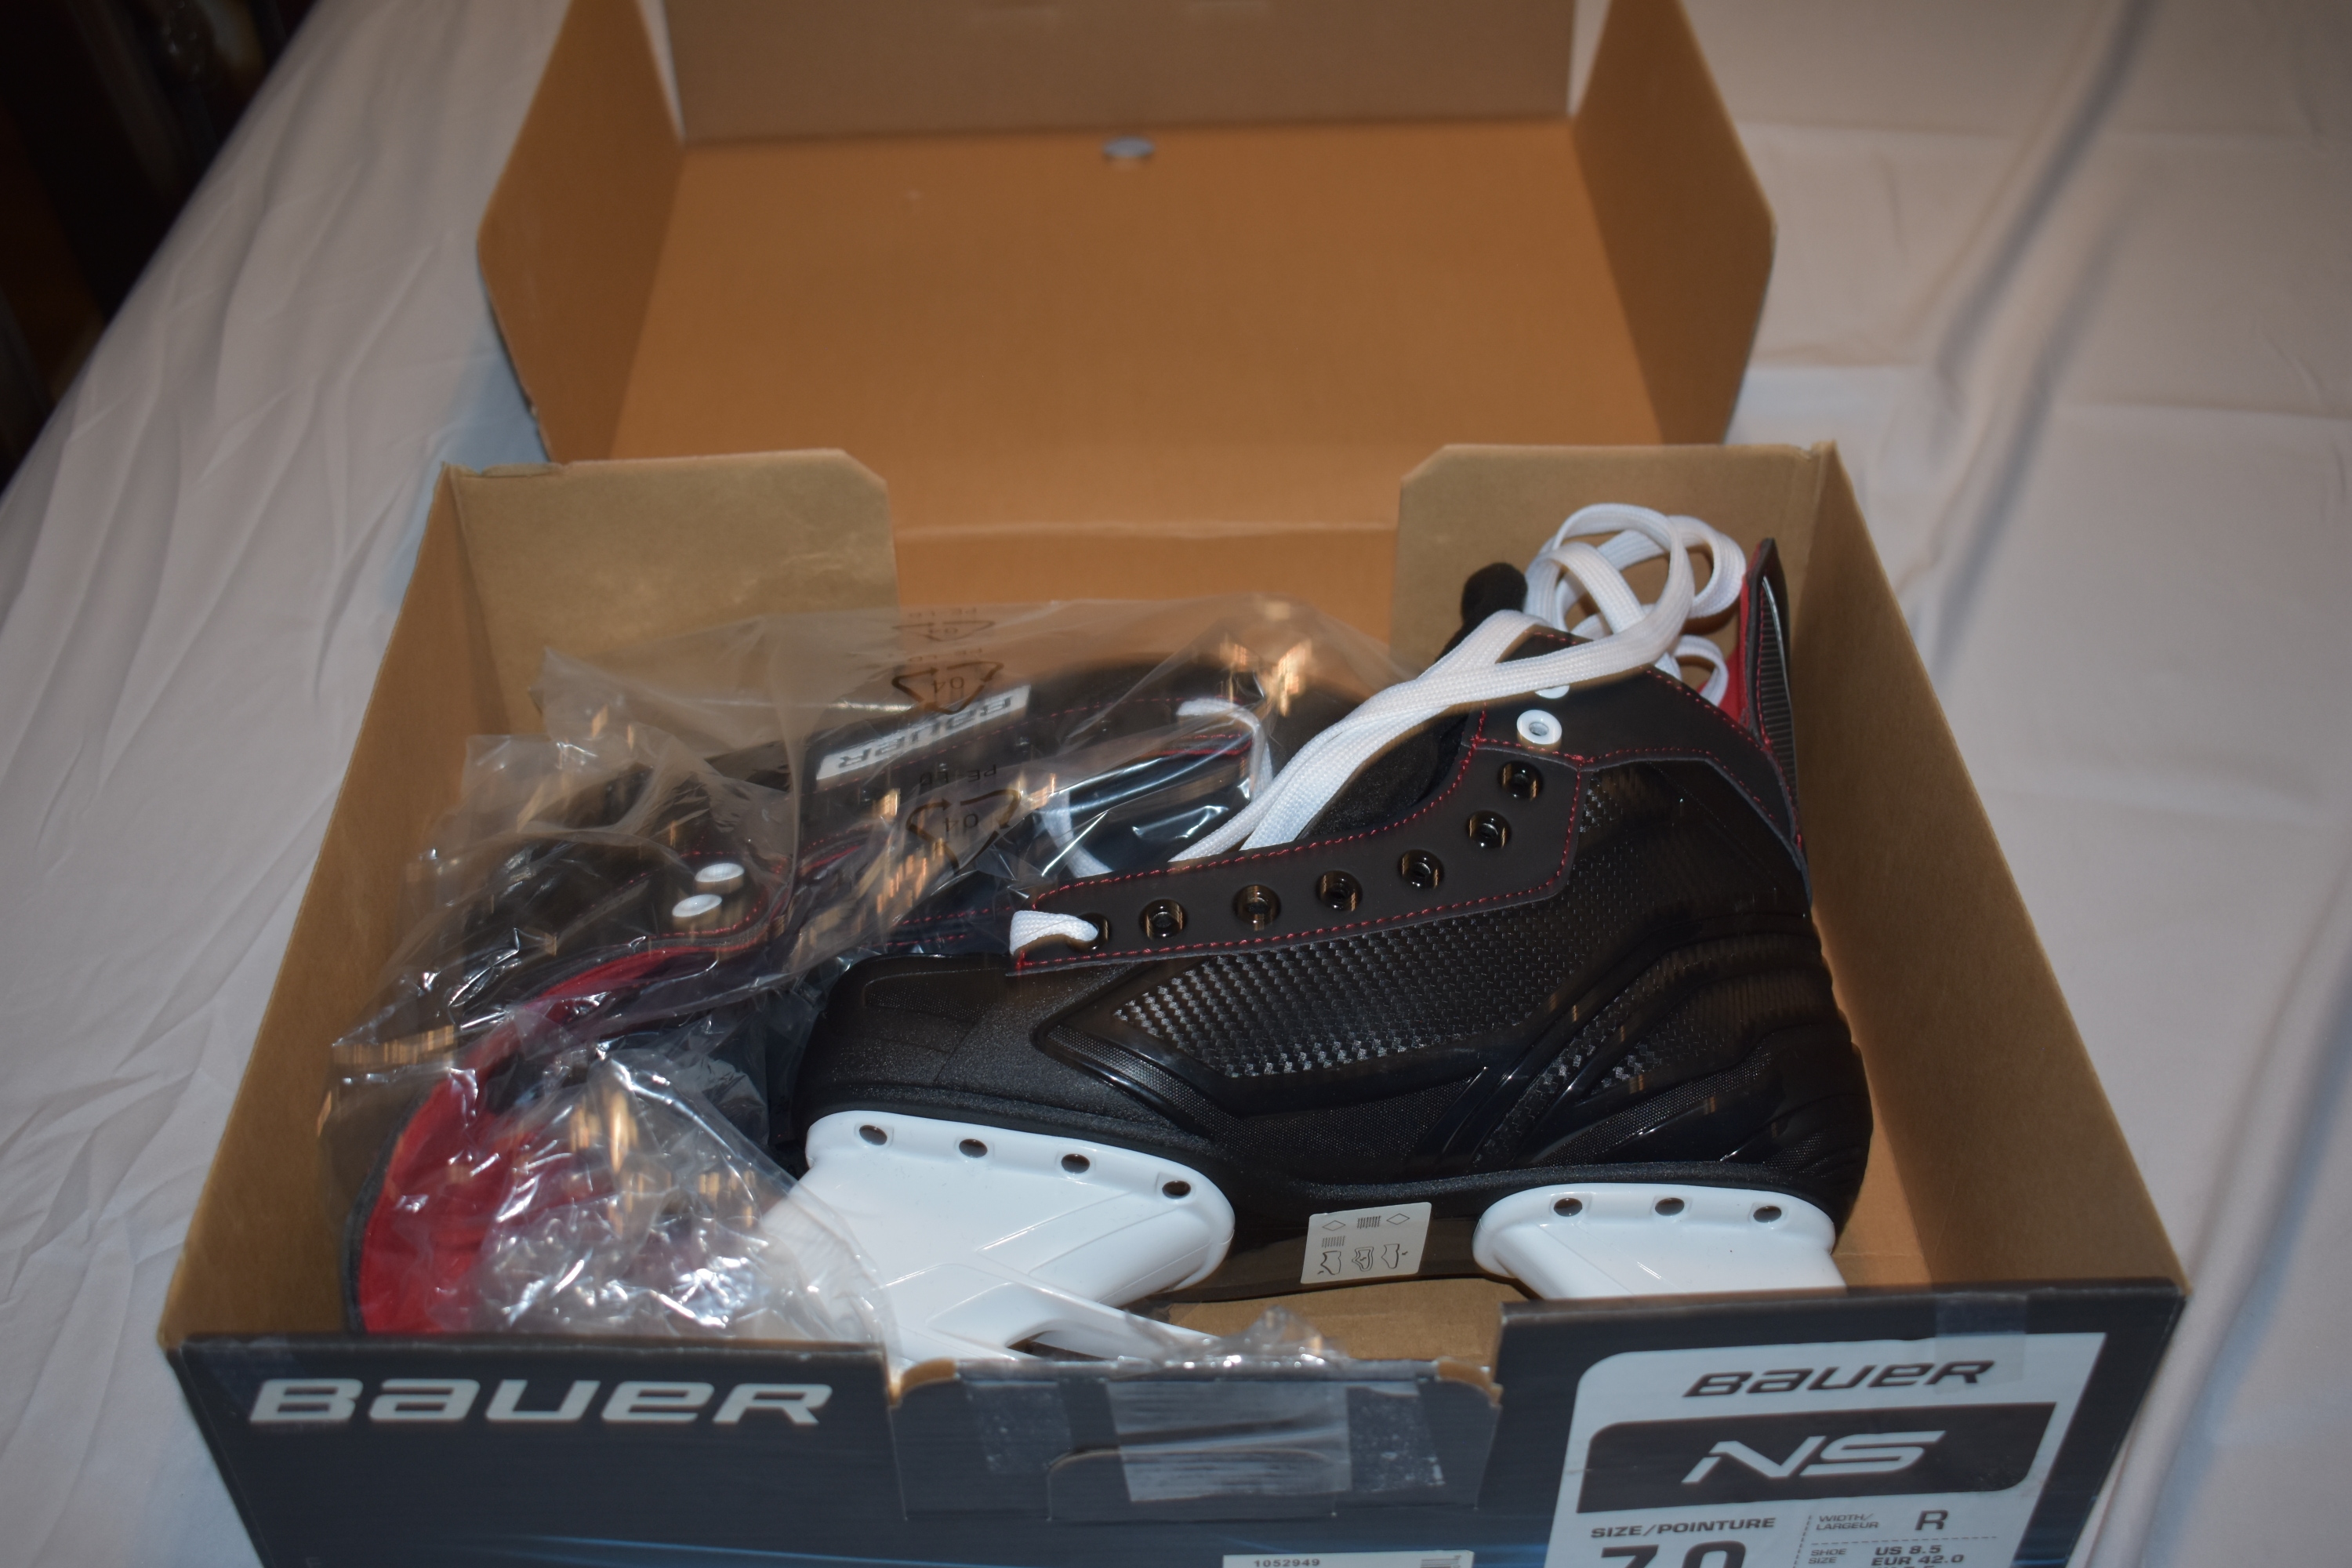 NEW - Bauer NS Hockey Skates, Size 7R - In Box